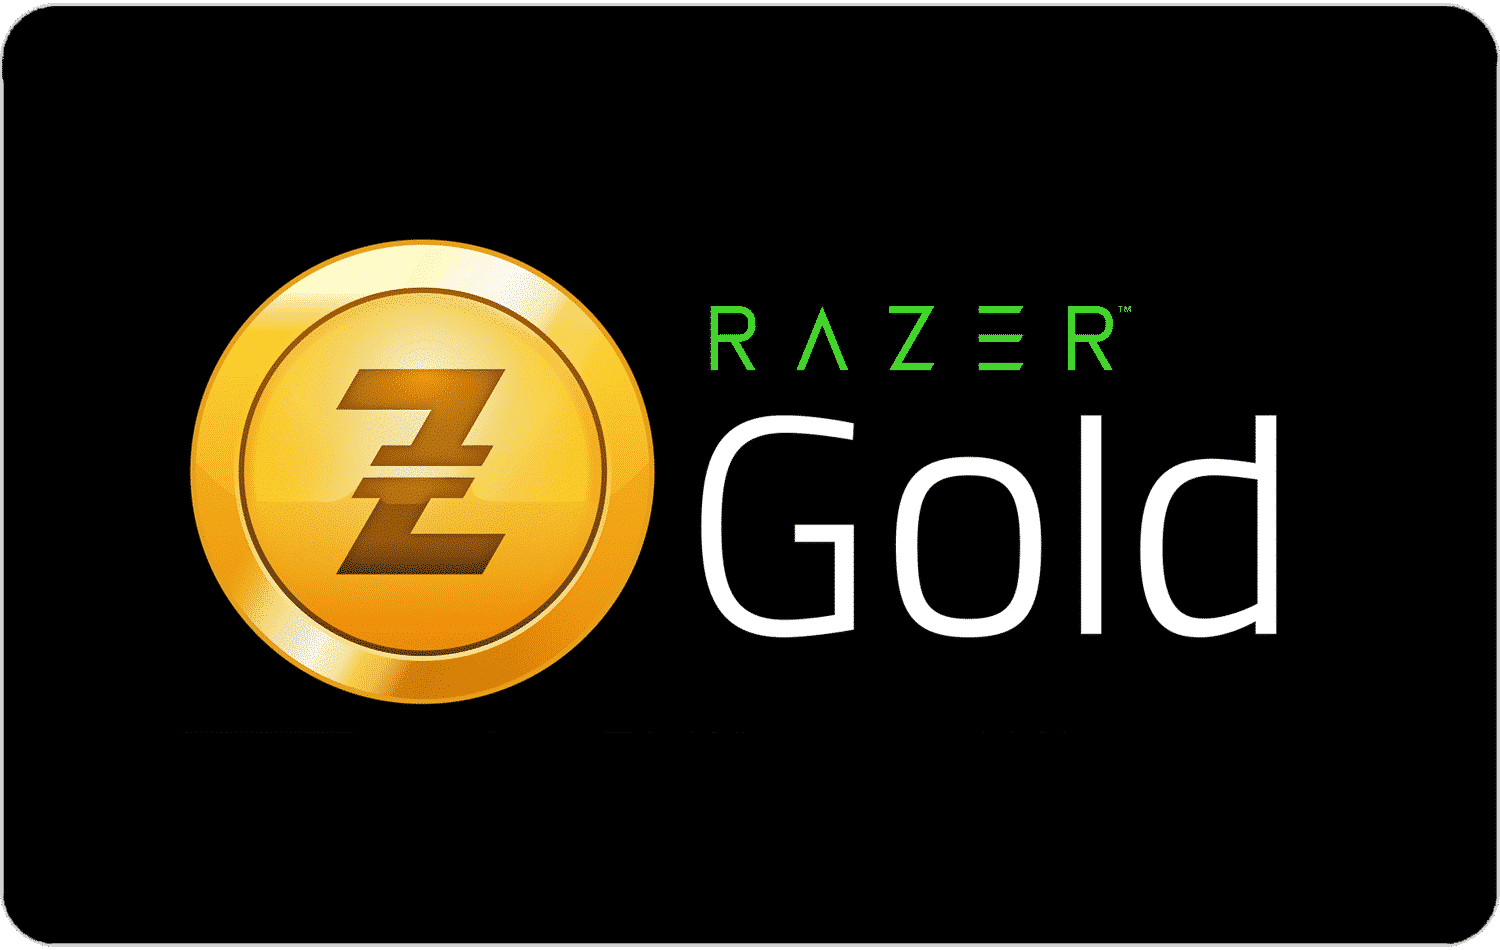 Razer gold nos consoles - aproveite agora | 4a0c2881 razer | married games razer gold | razer gold | razer gold nos consoles